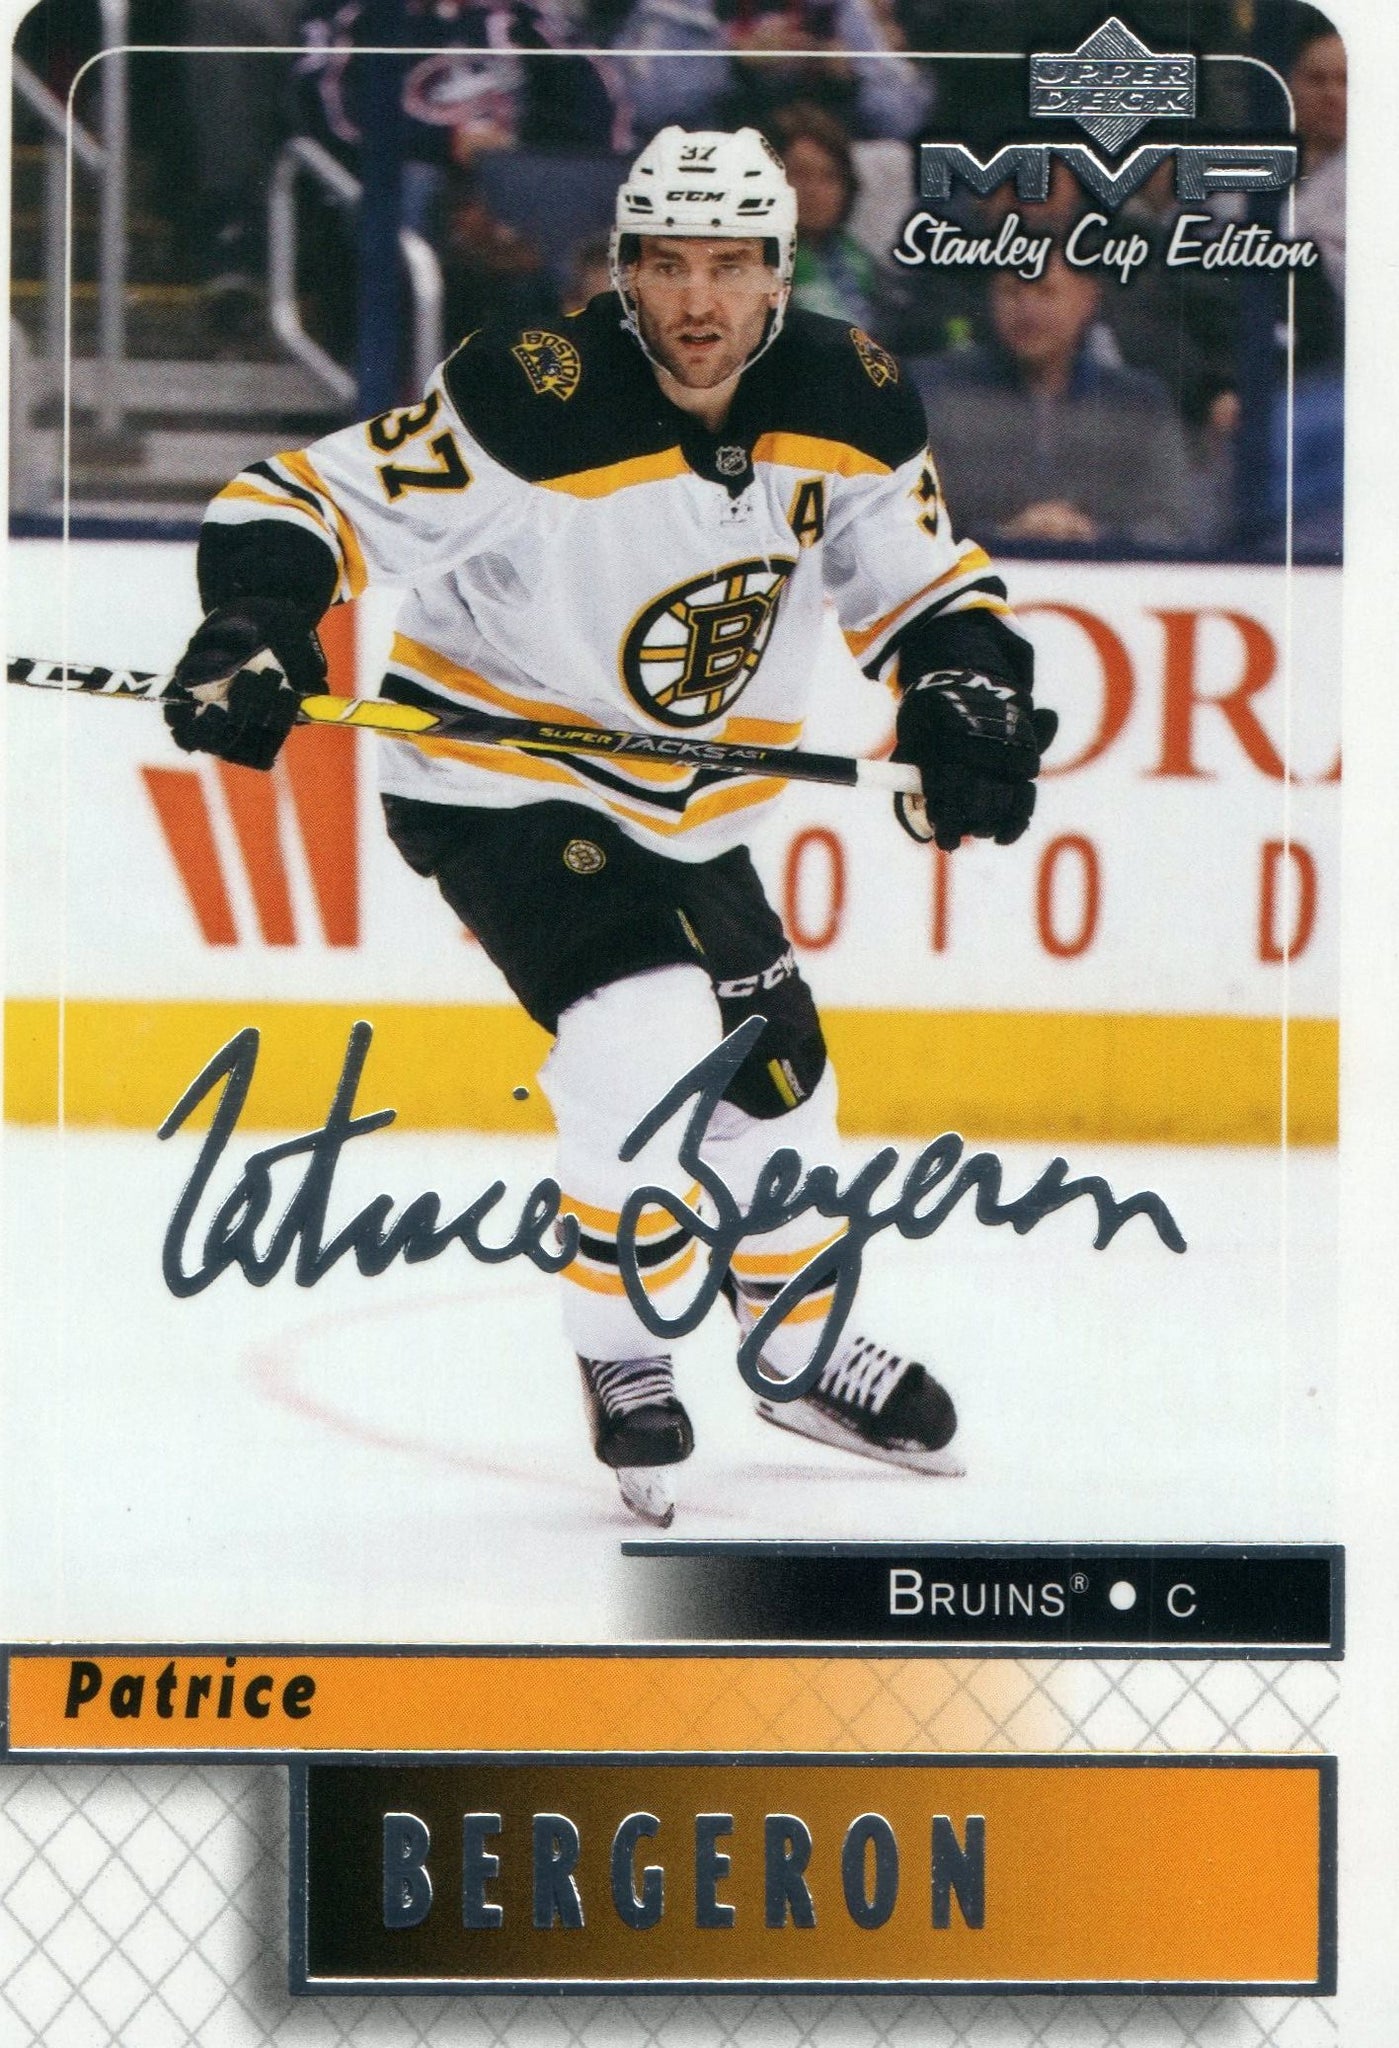  2018-19 Upper Deck Hockey Card #19 Patrice Bergeron